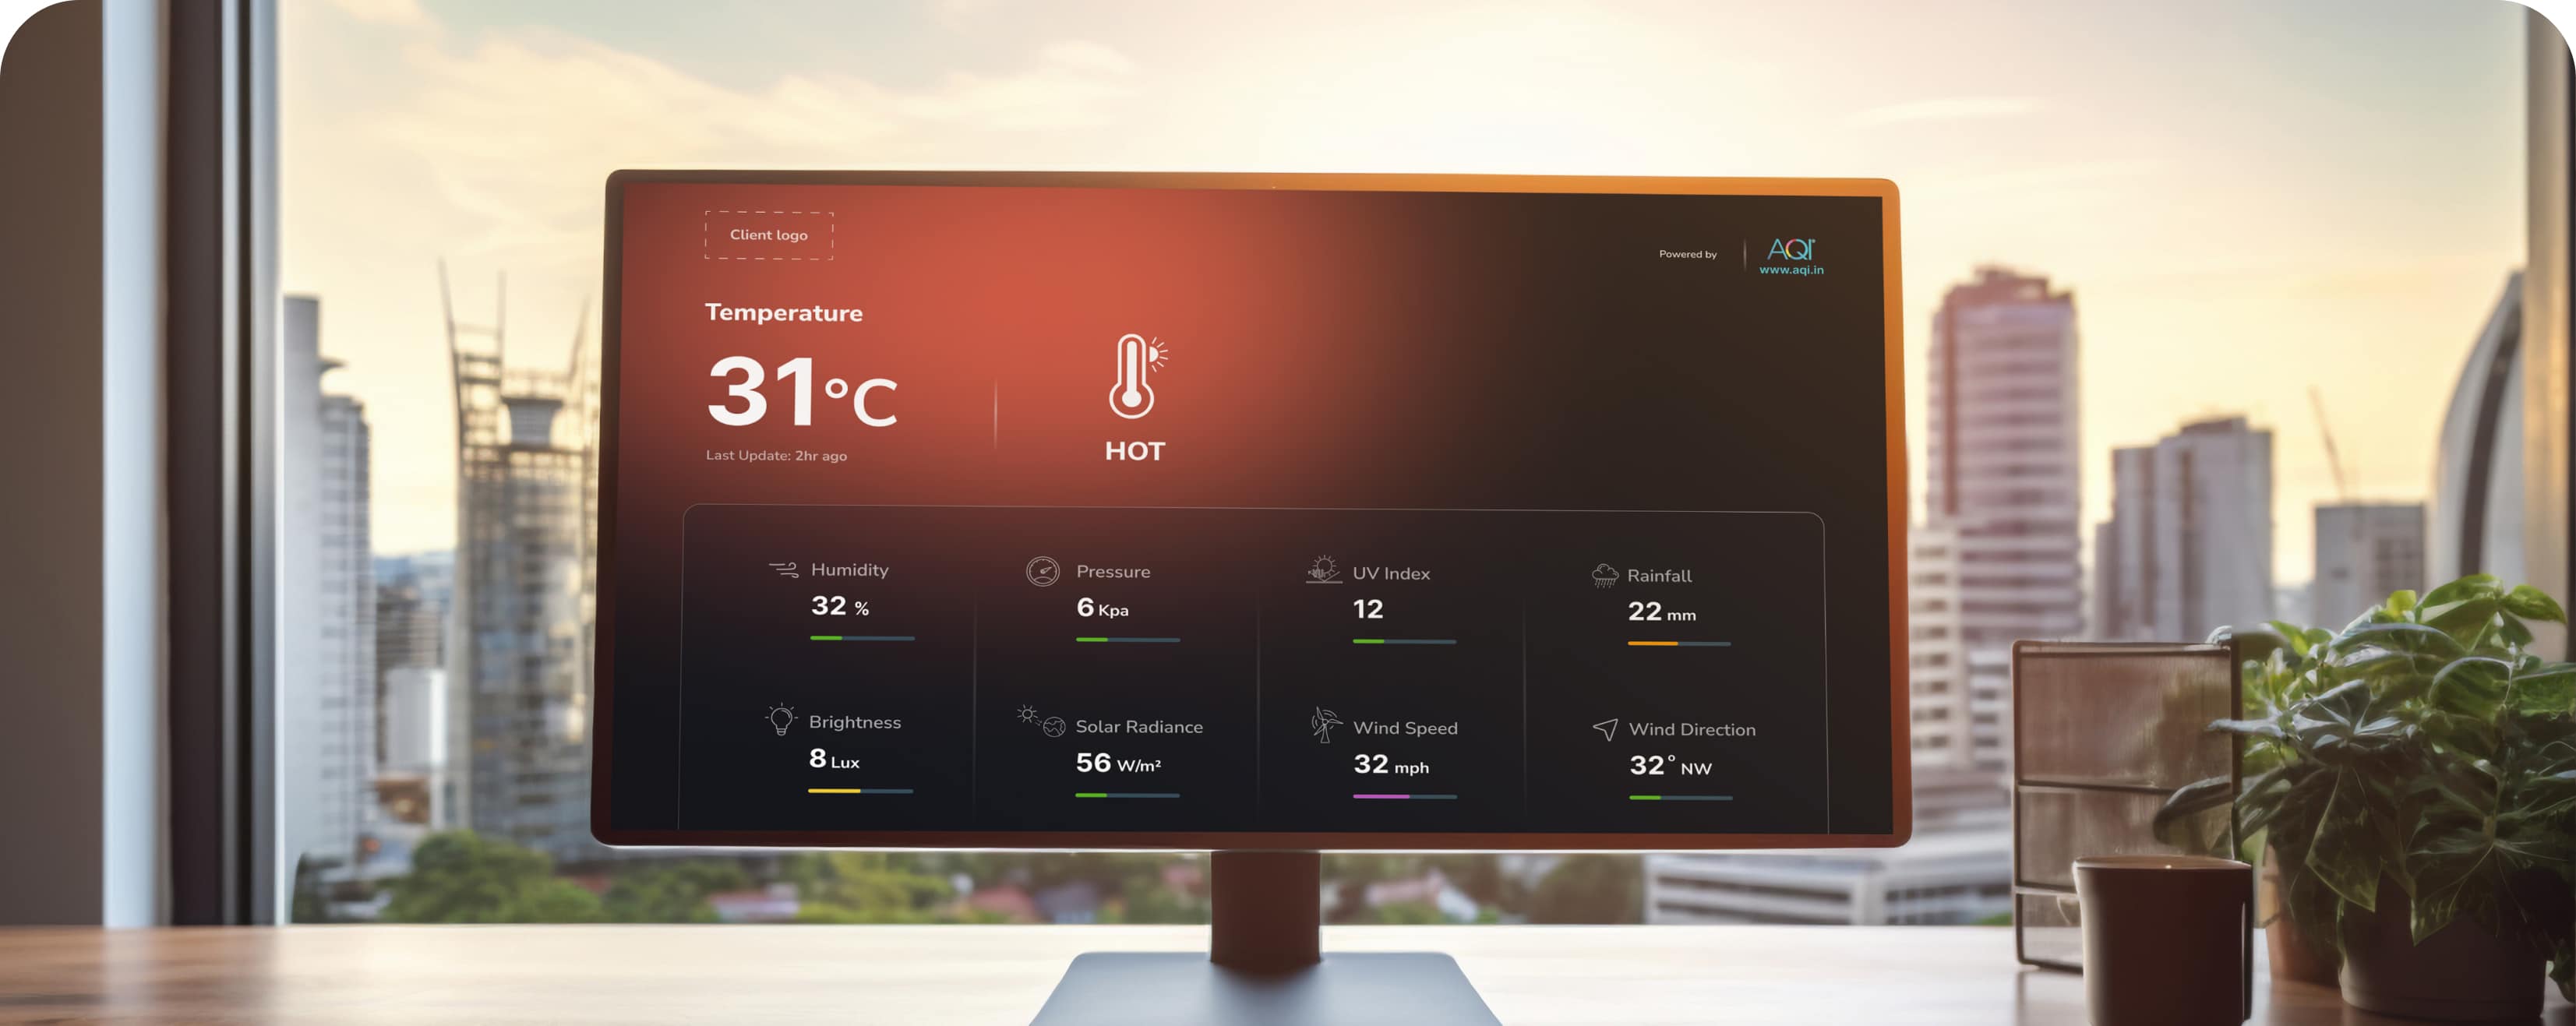 prana air weather station data on smart TV app